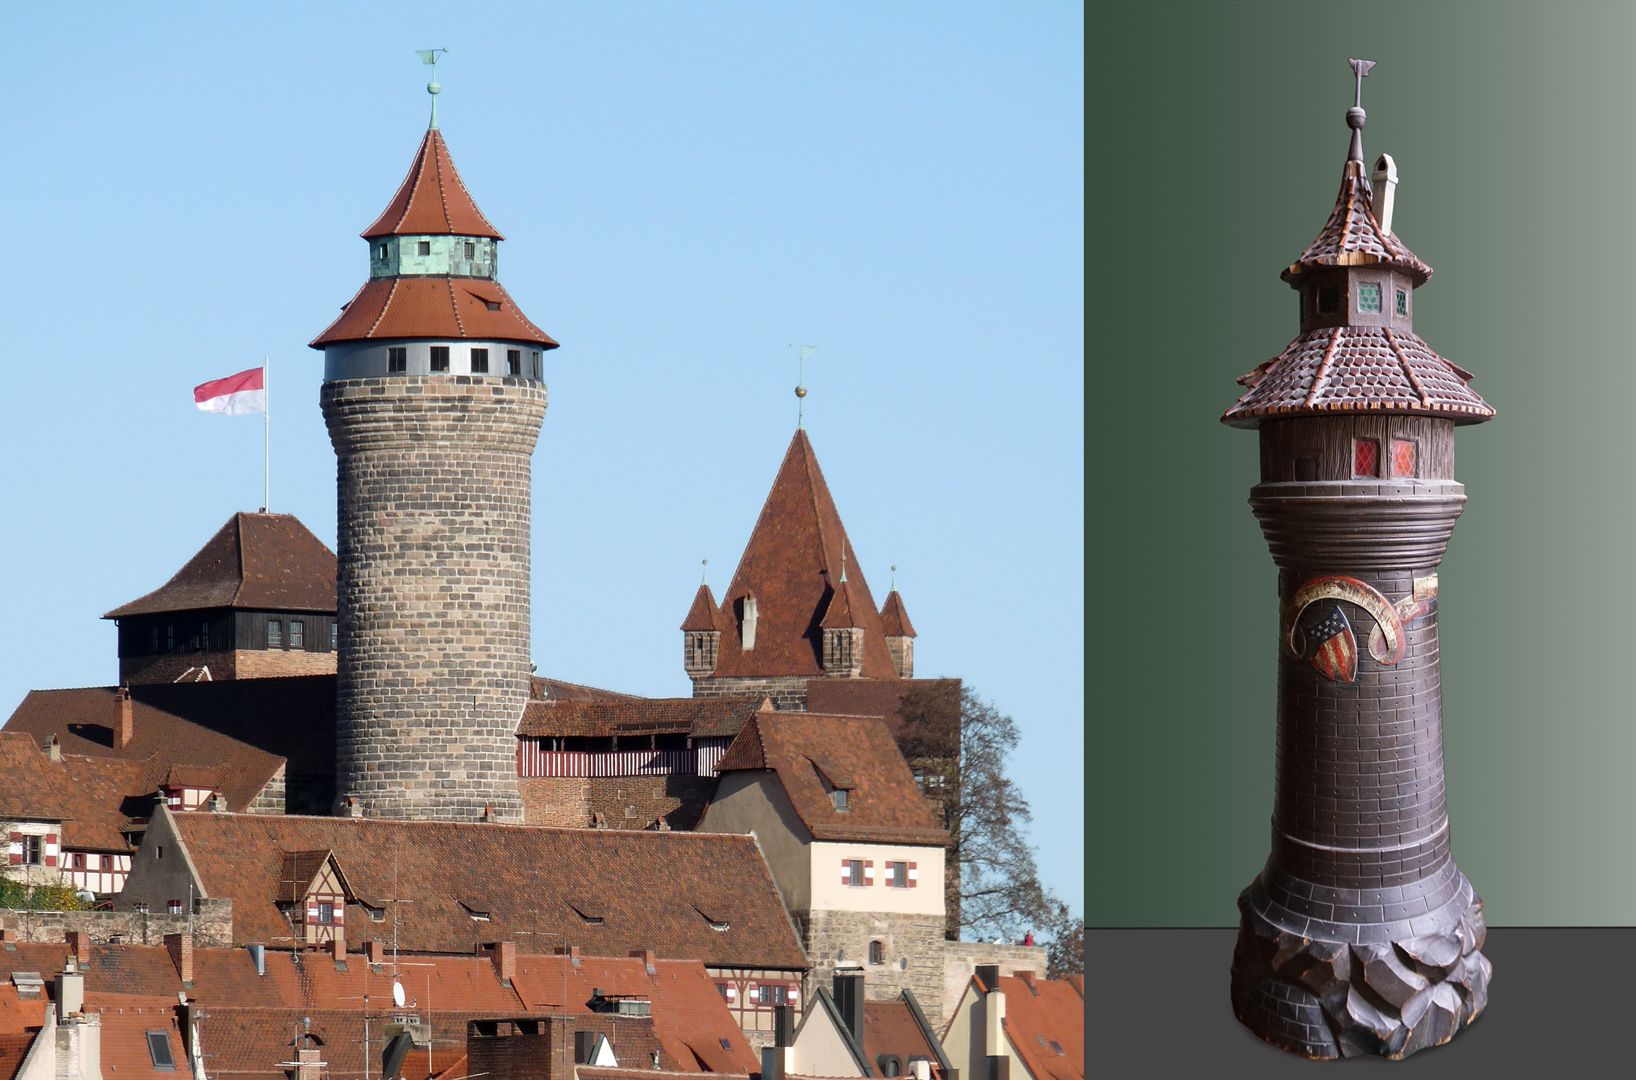 Spardose Bildvergleich mit dem Sinwellturm der Nürnberger Burg